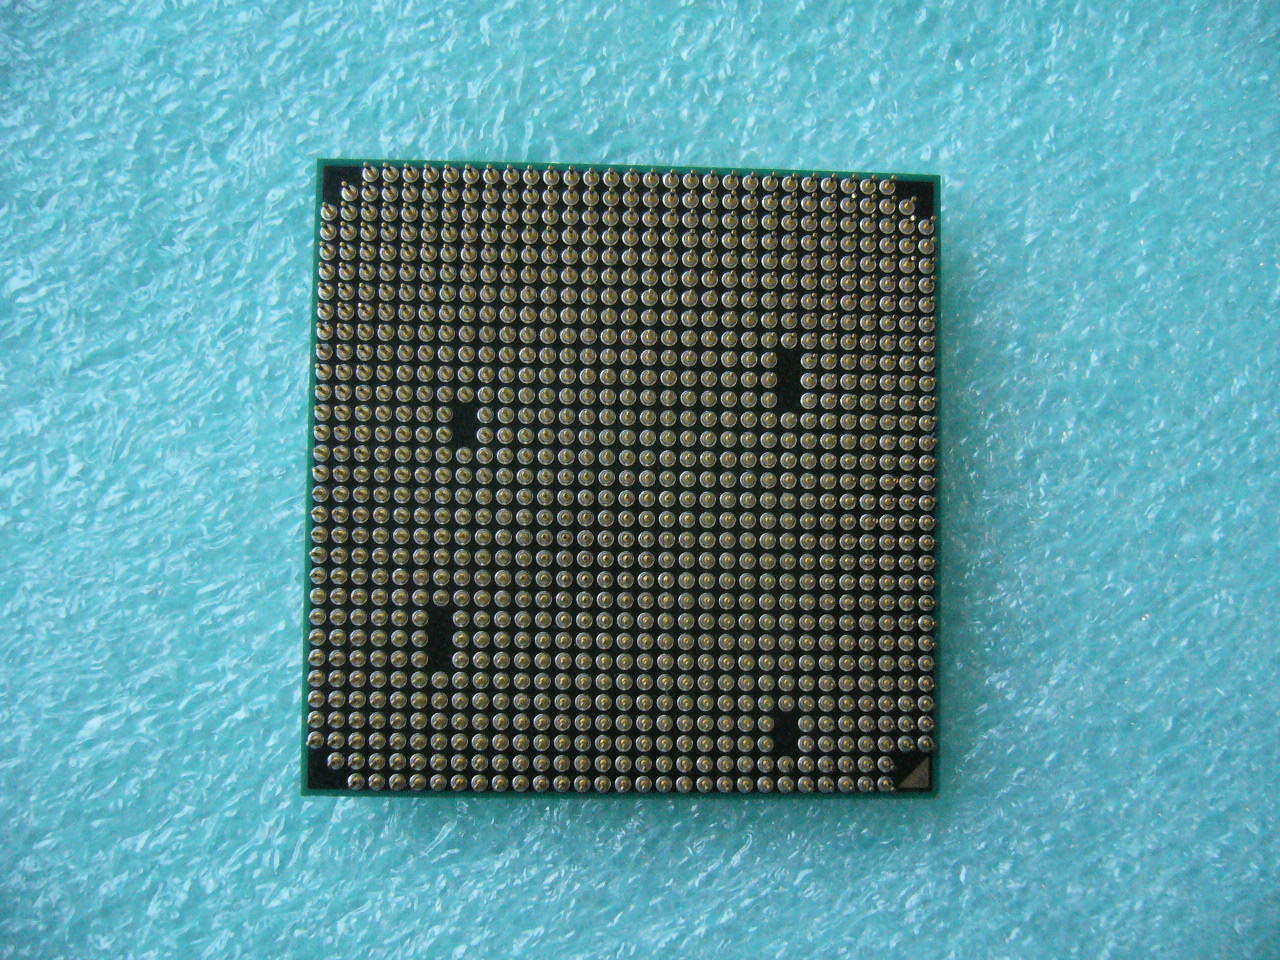 QTY 1x AMD Athlon II X2 215 2.7 GHz Dual-Core (ADX215OCK22GQ) CPU Socket AM3 - zum Schließen ins Bild klicken